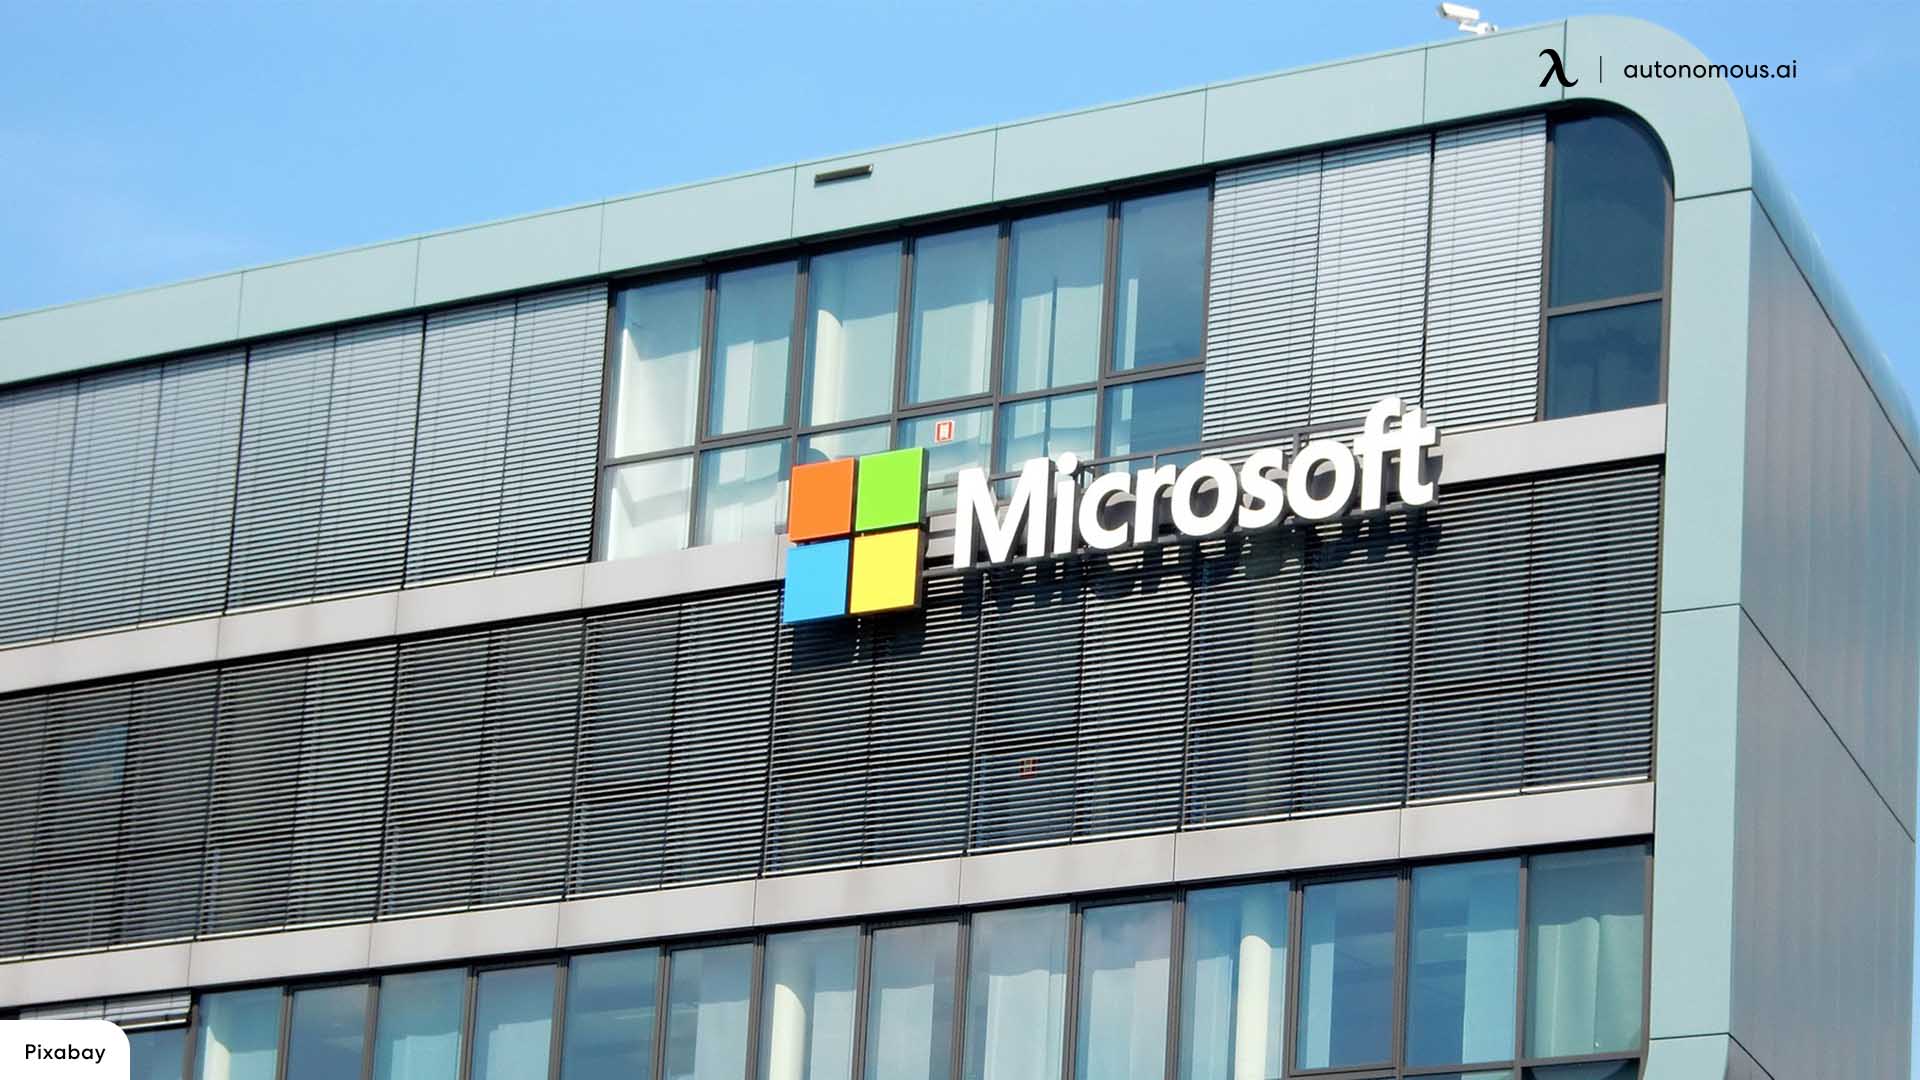 Microsoft Employee Discount Program by Autonomous